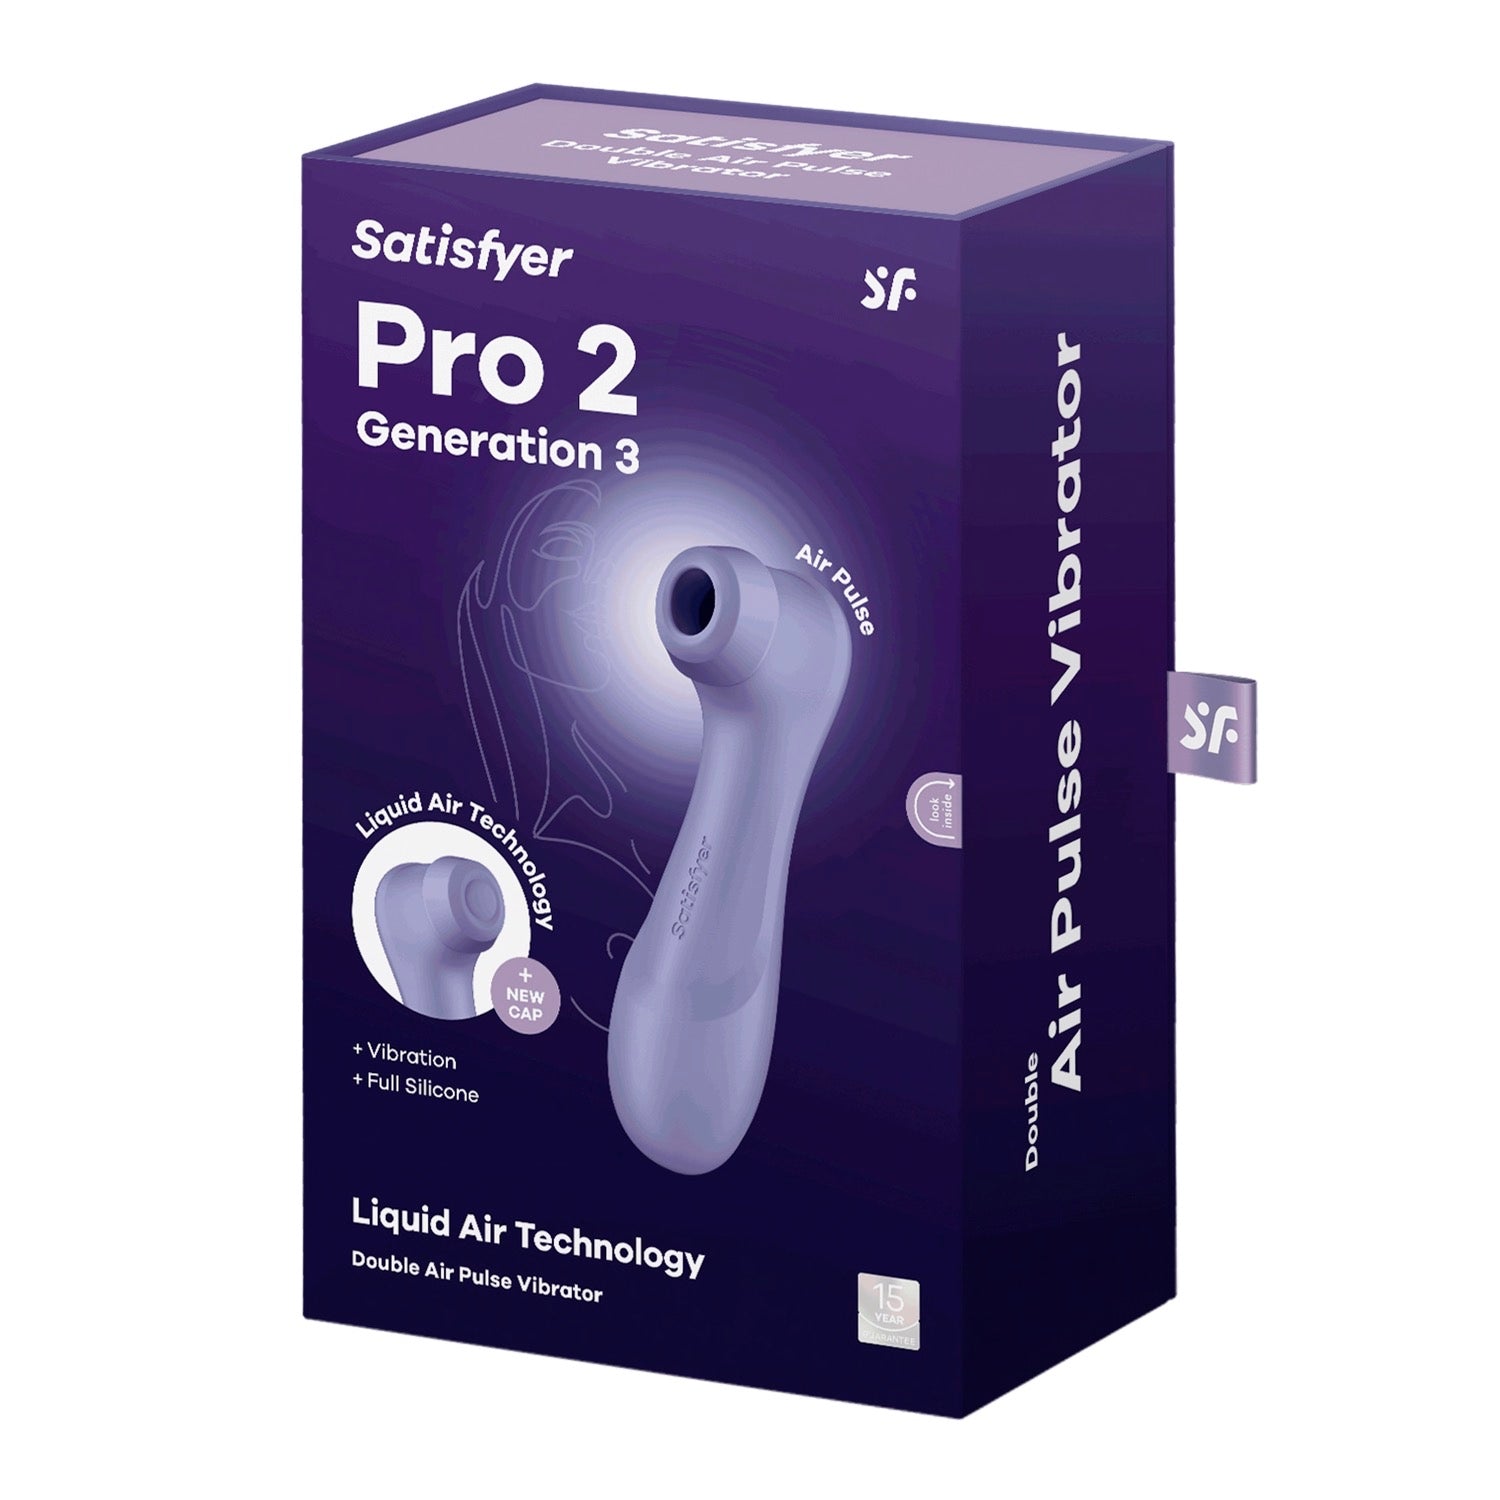 Satisfyer Pro 2 Generation 3 - Purple by Satisfyer